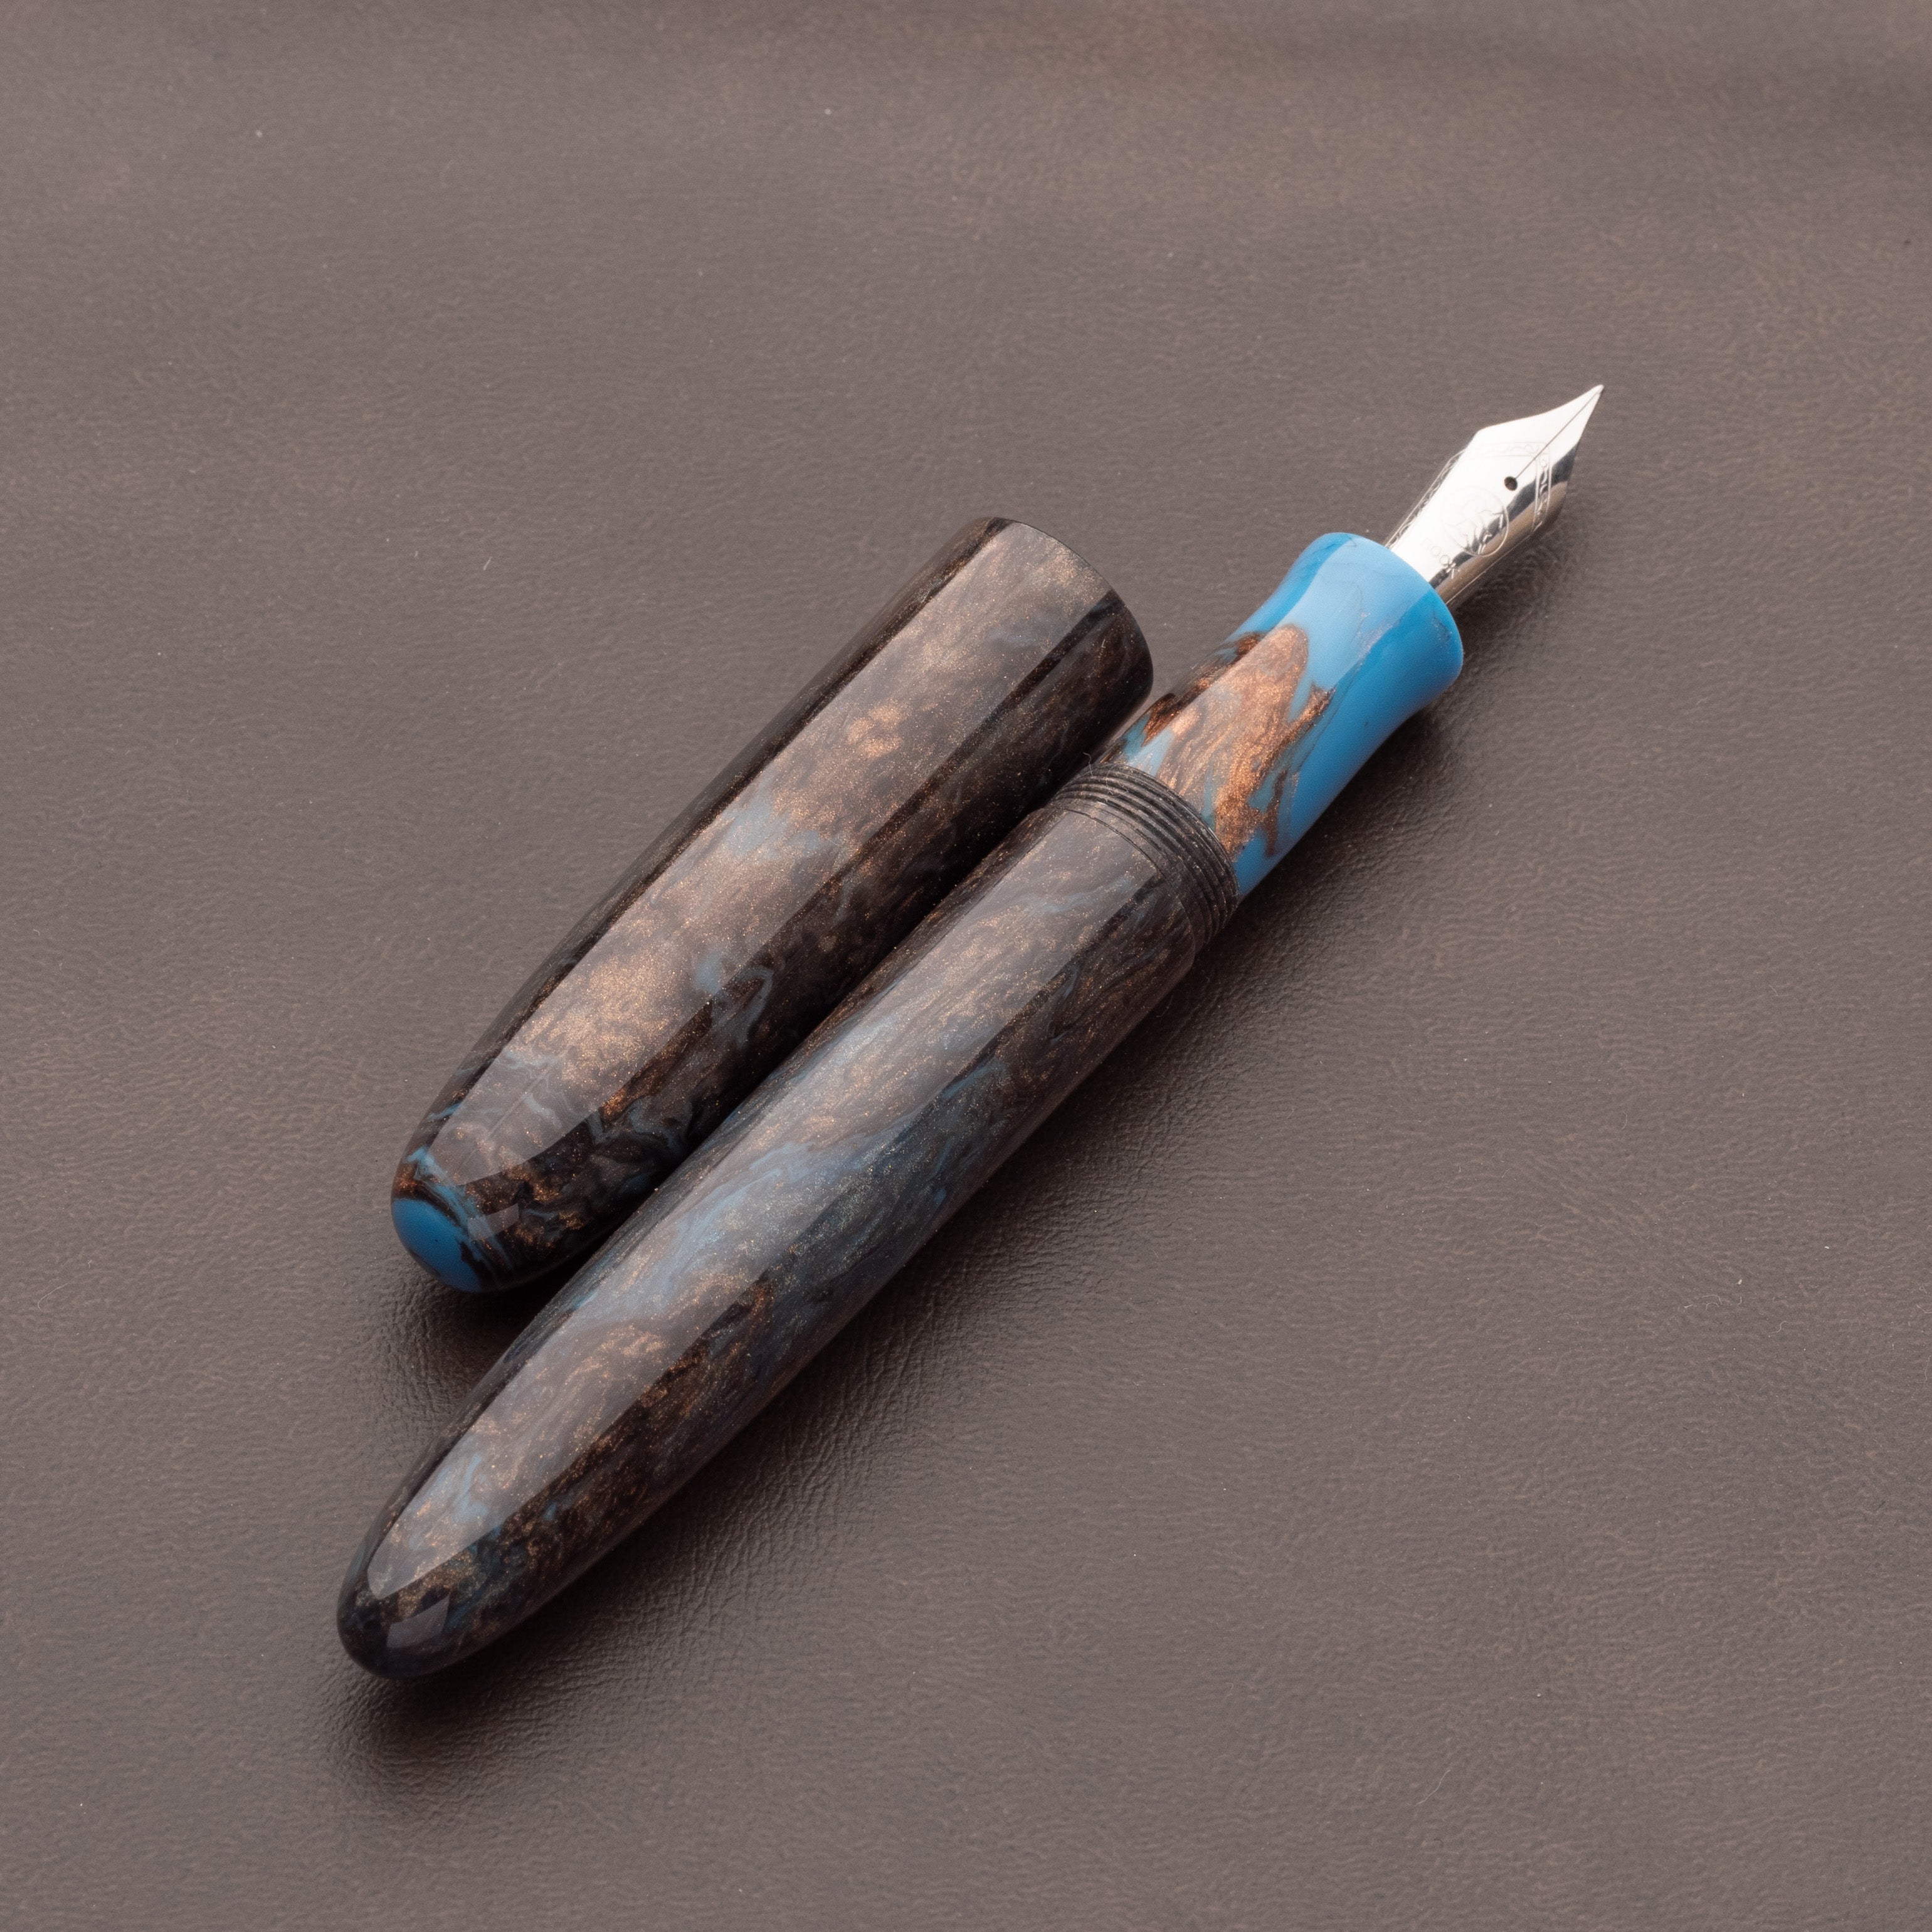 Fountain Pen - Bock #6 - 15 mm - In-House 'Copper Ore'